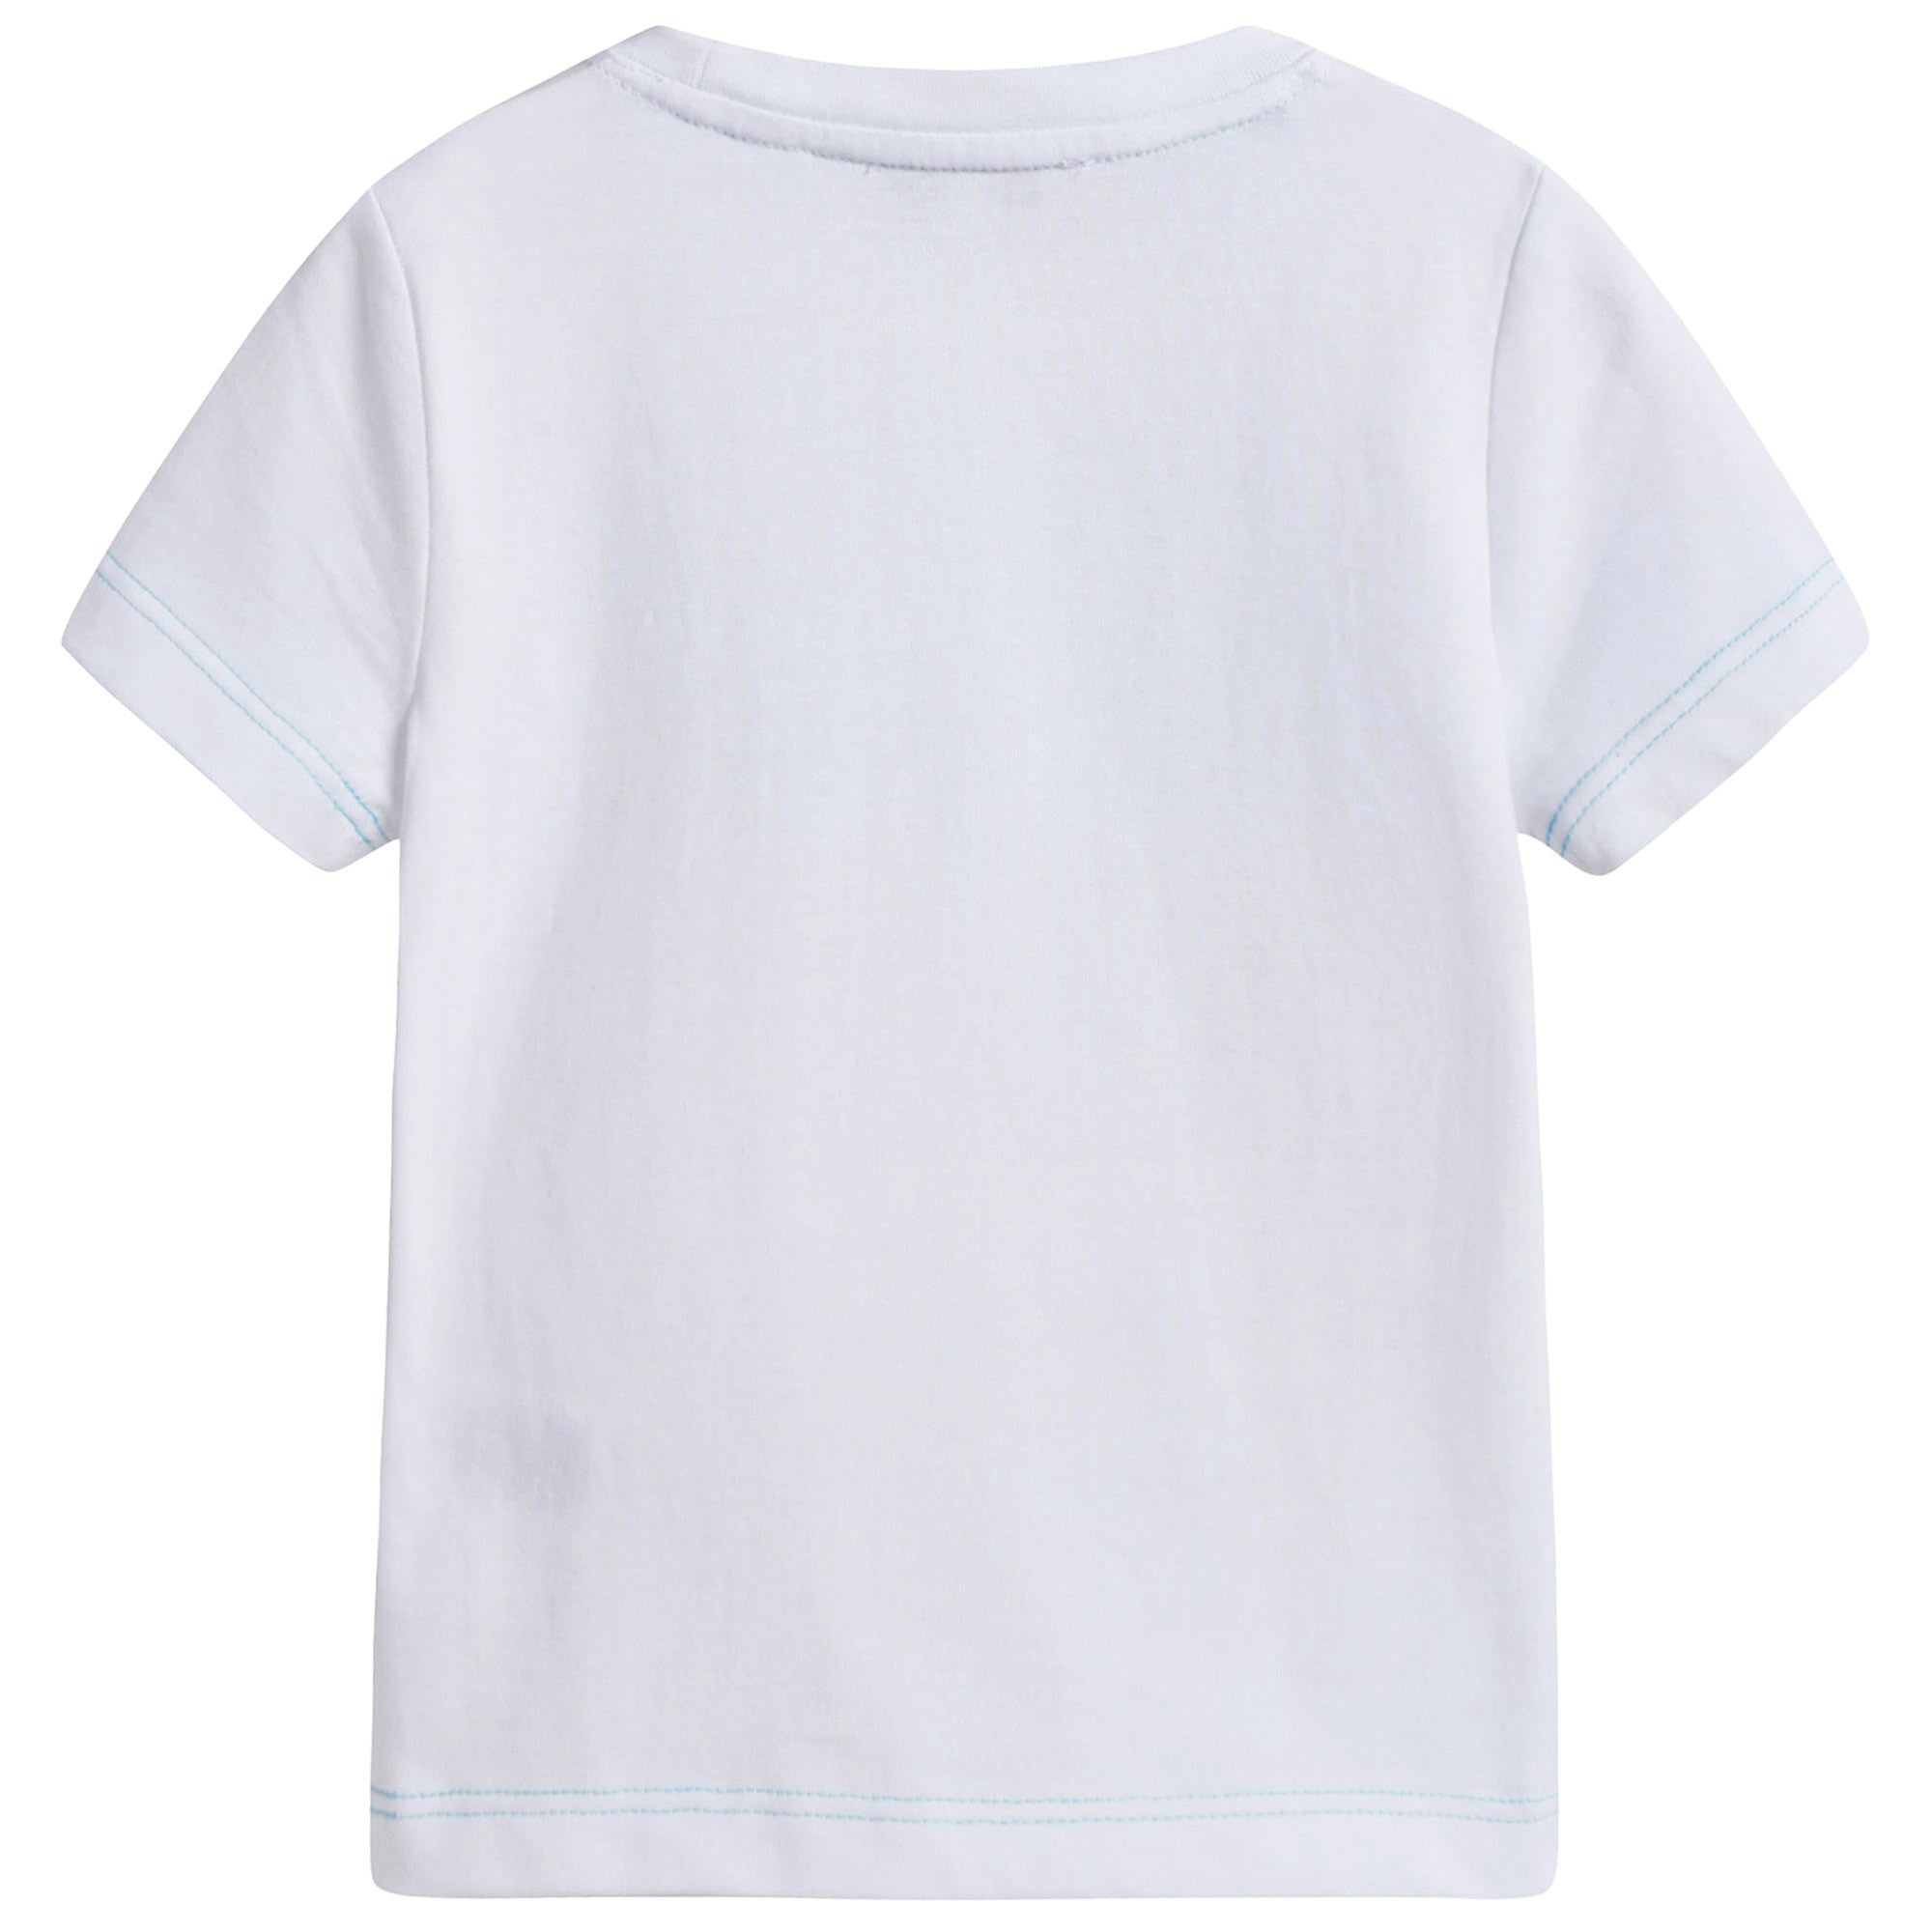 Boys White 'Marc Jacobs' Cotton T-shirt